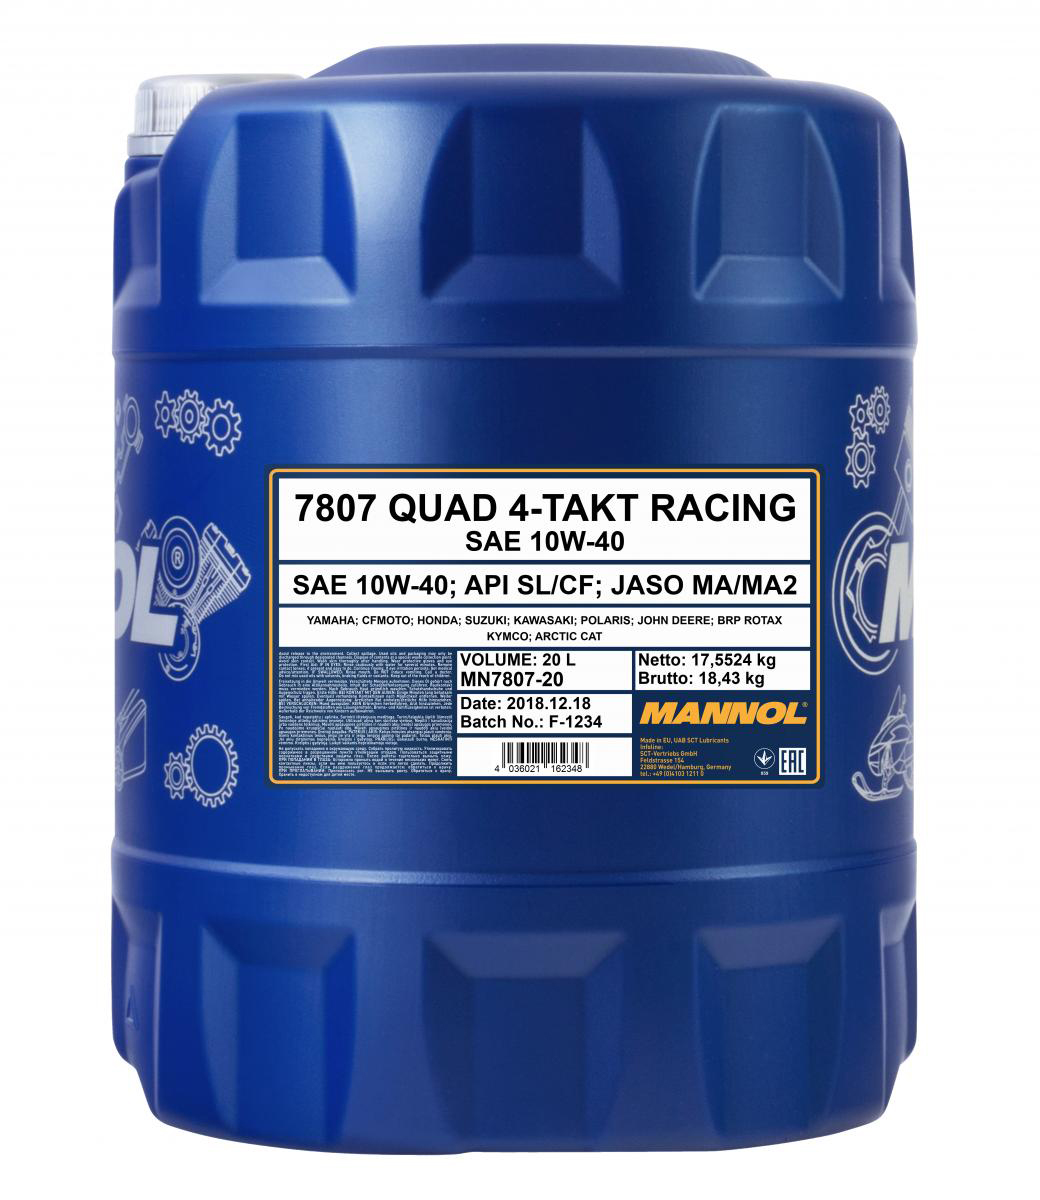 Quad 4-Takt Racing 10W-40